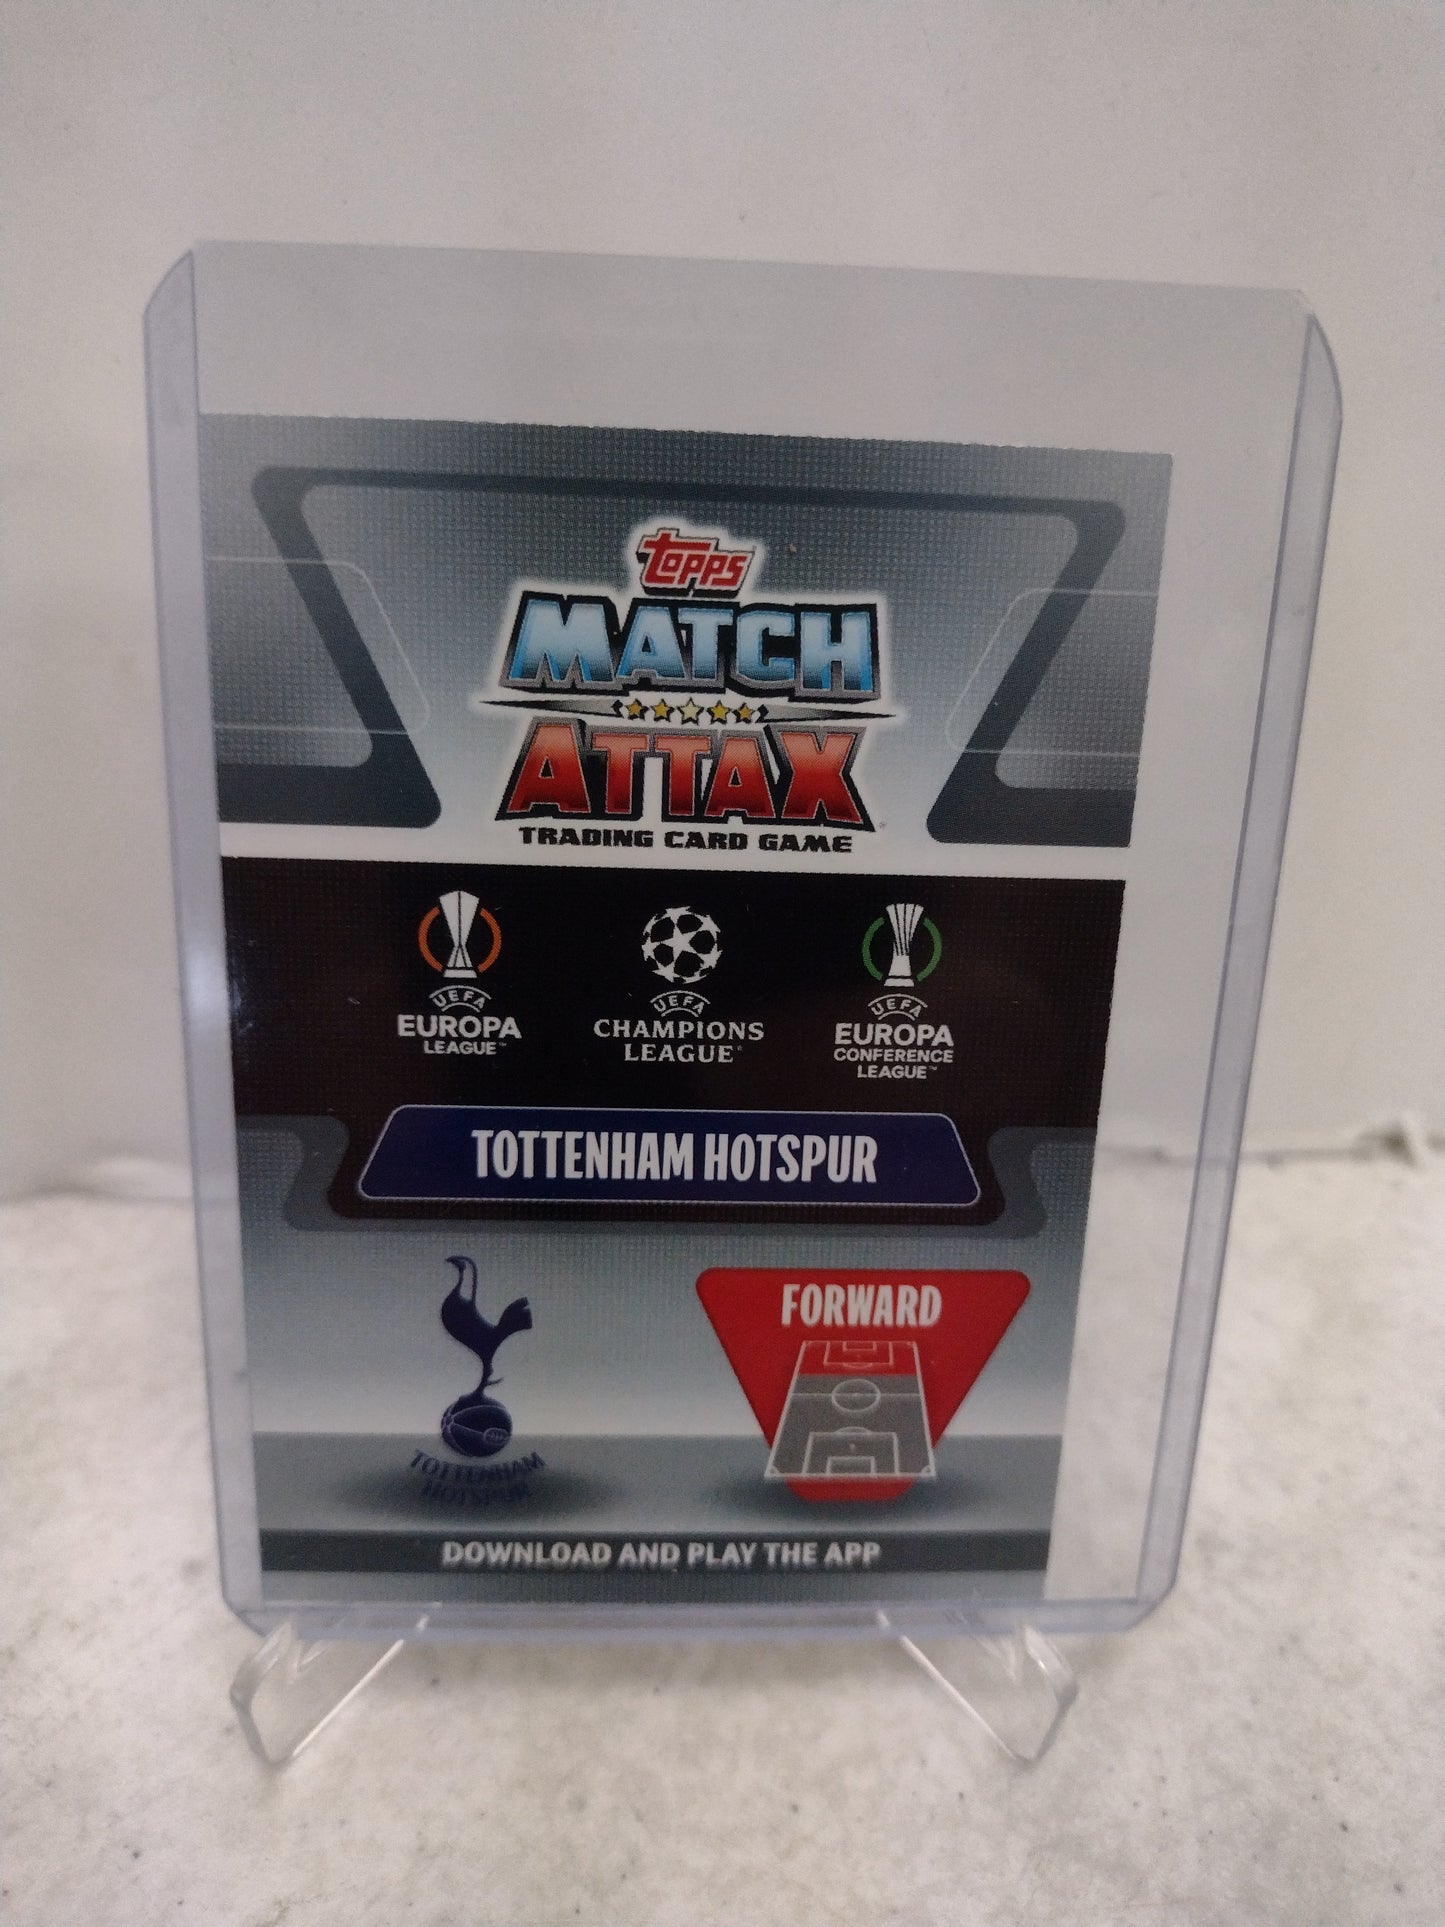 Harry Kane Tottenham Hotspur Goal Machine Europa League 21/22 Single Card with Protective Case